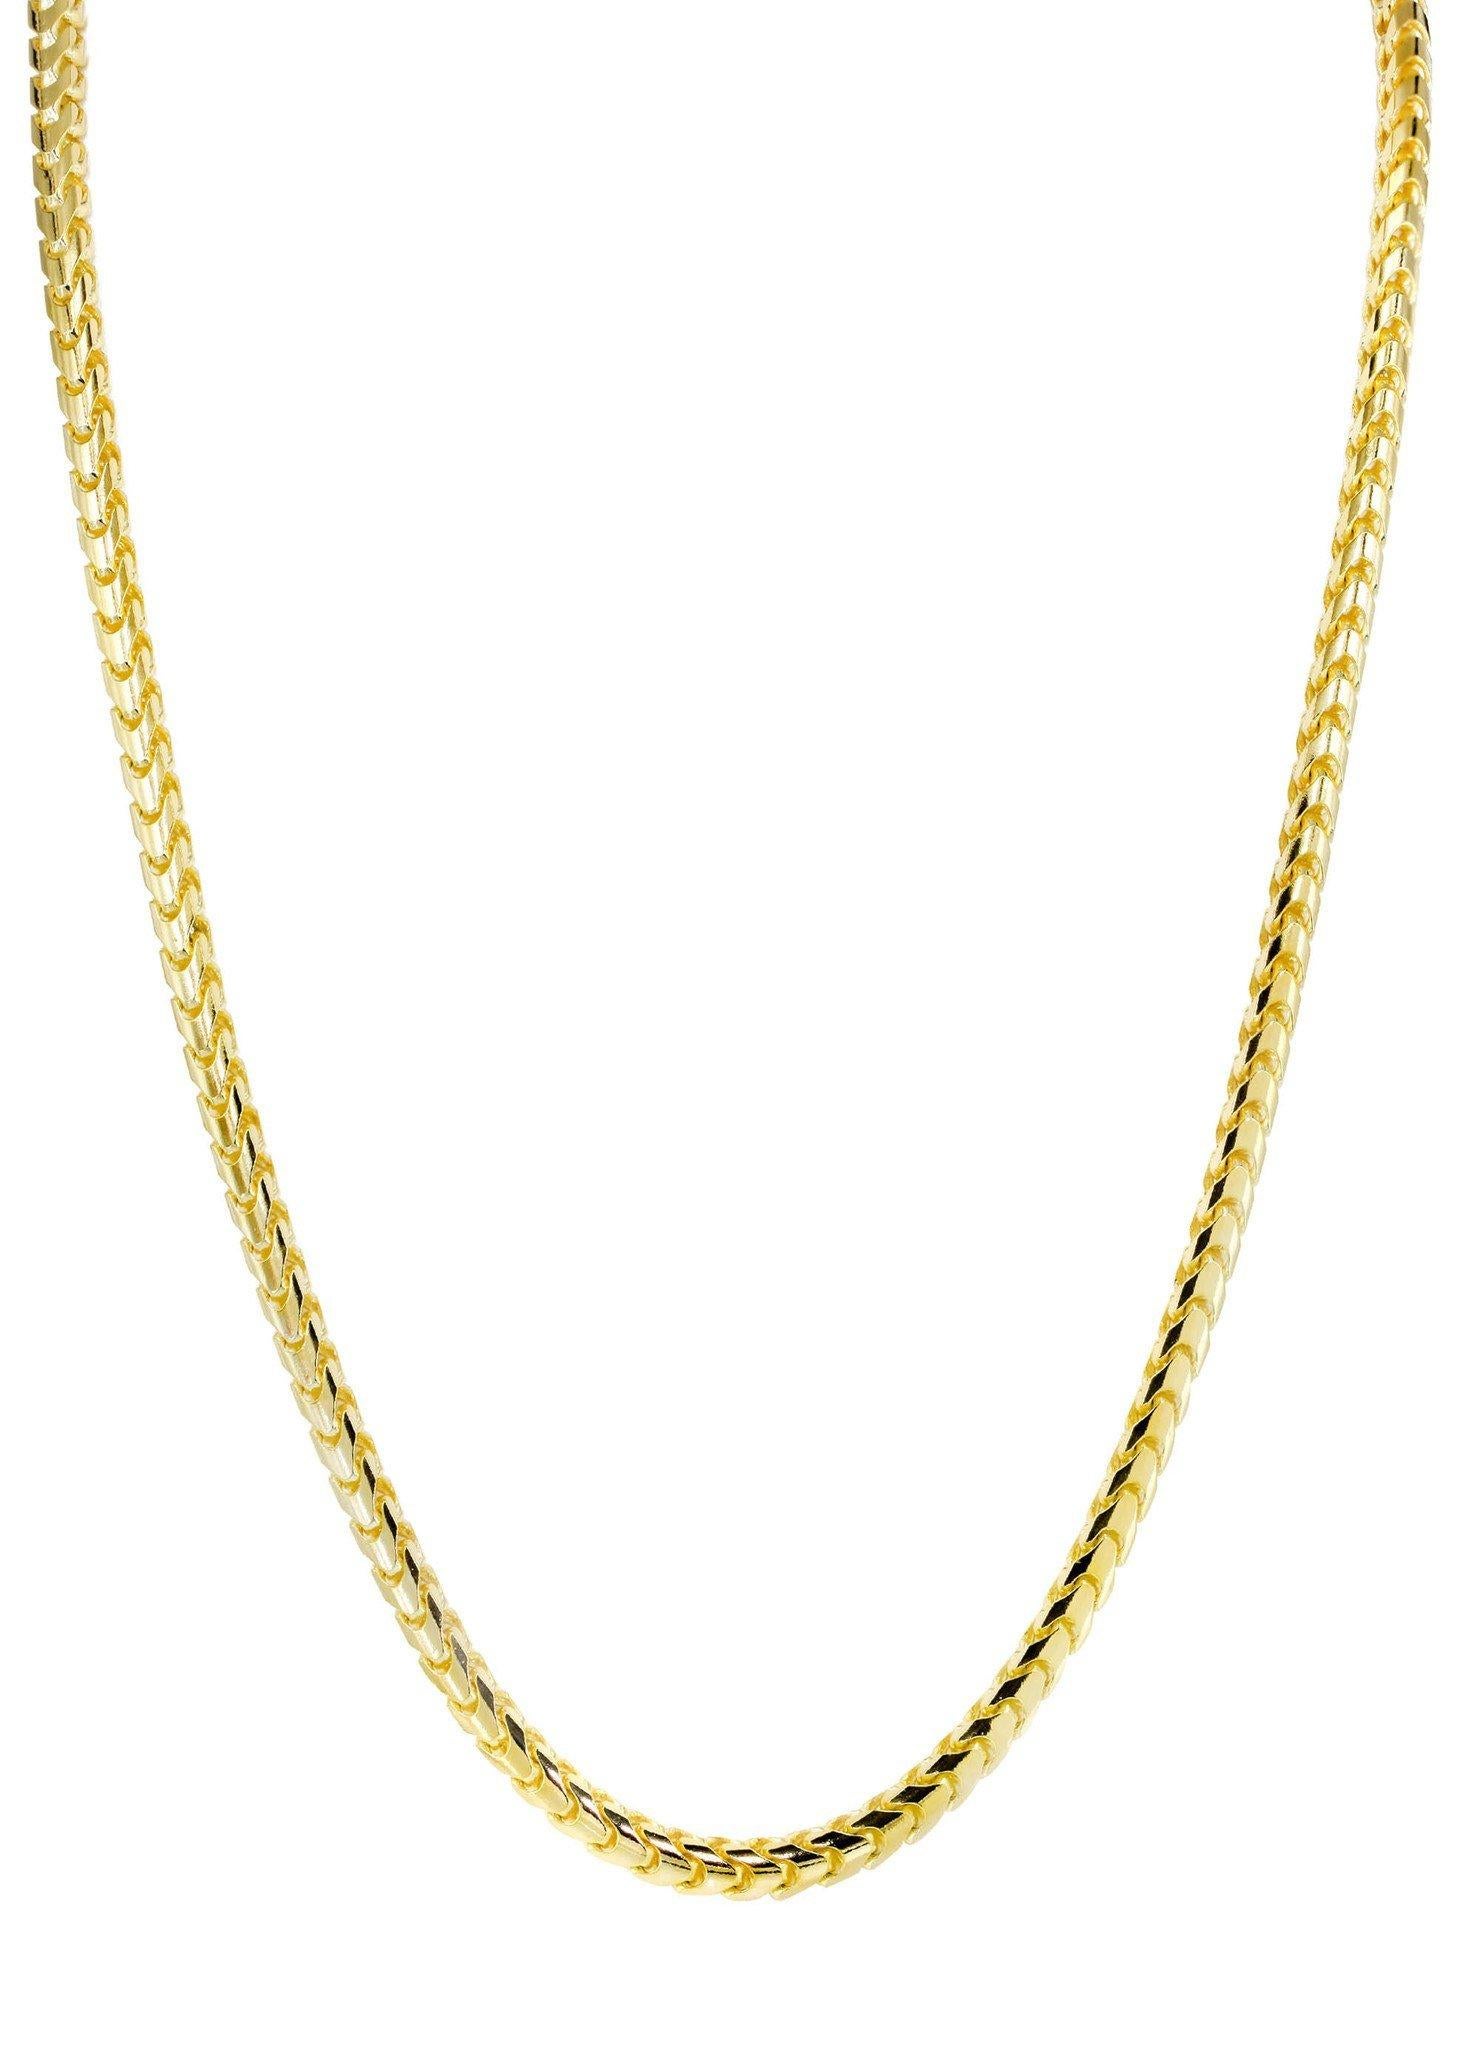 25 gram gold necklace